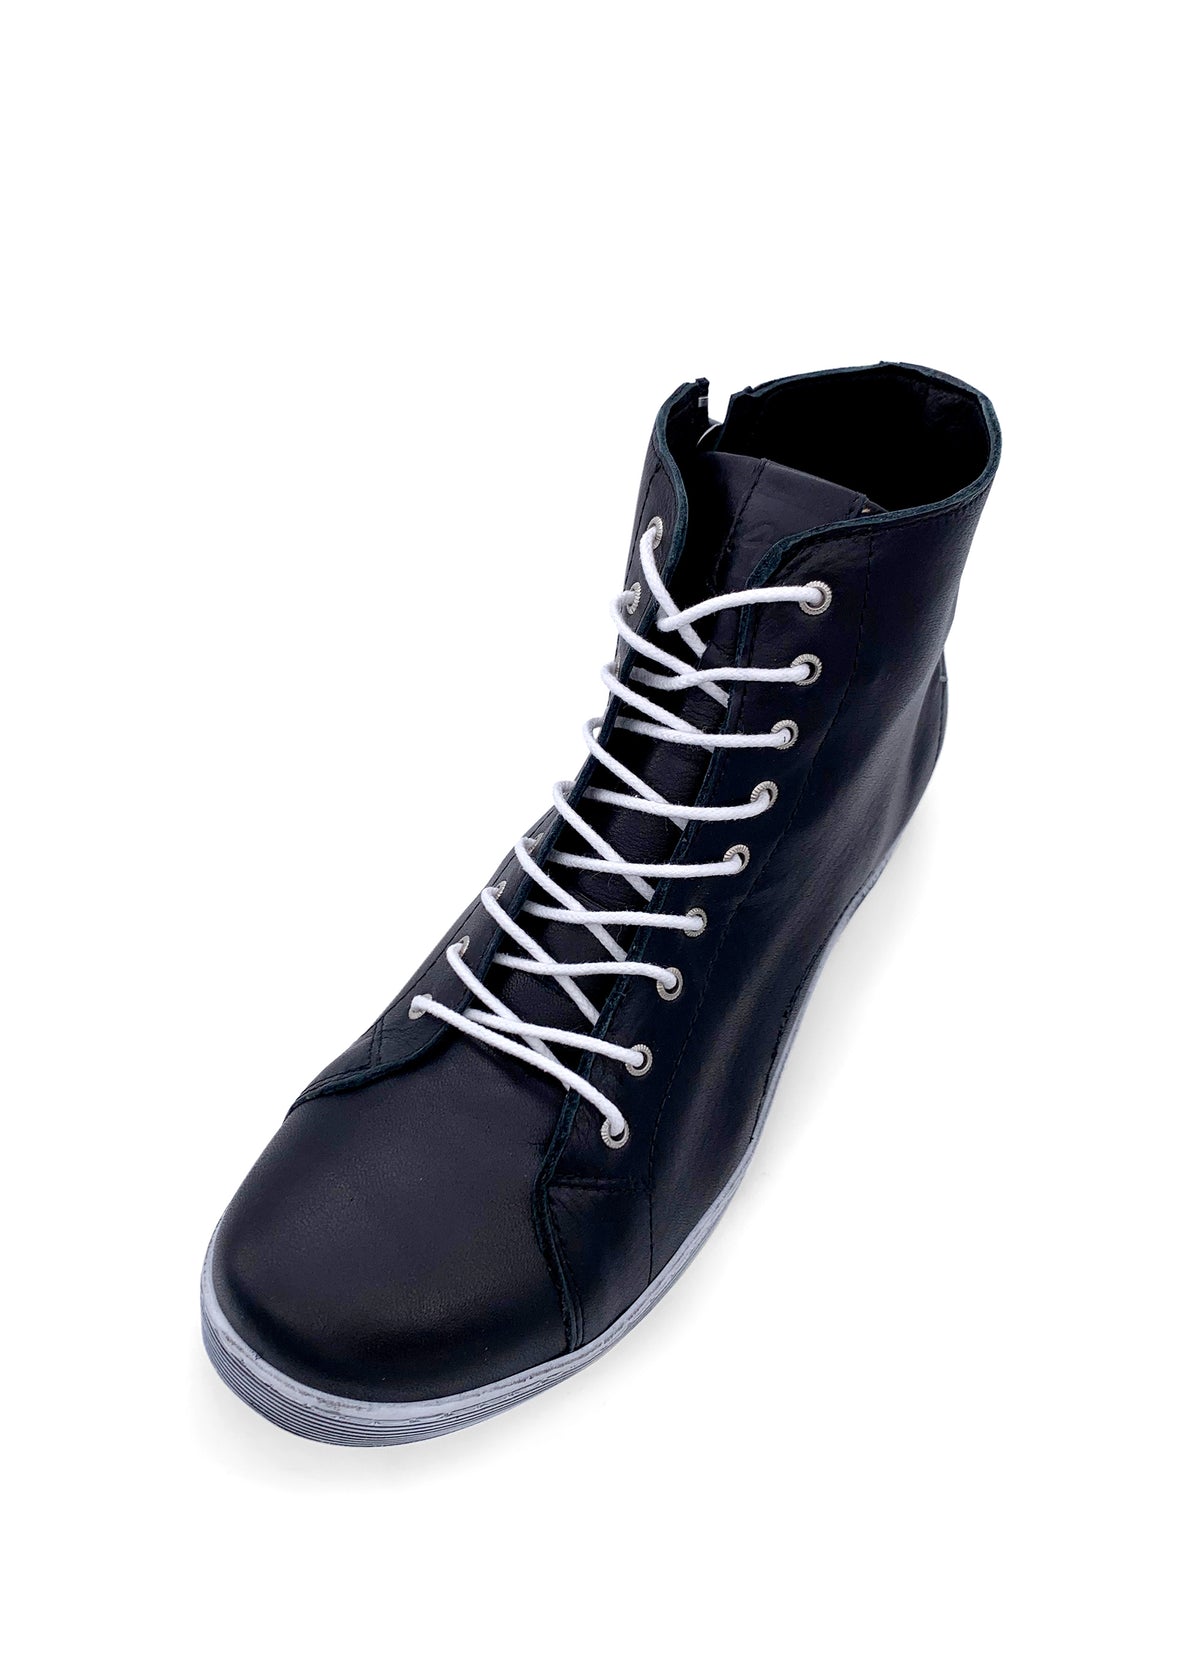 Sneakers with handles - black